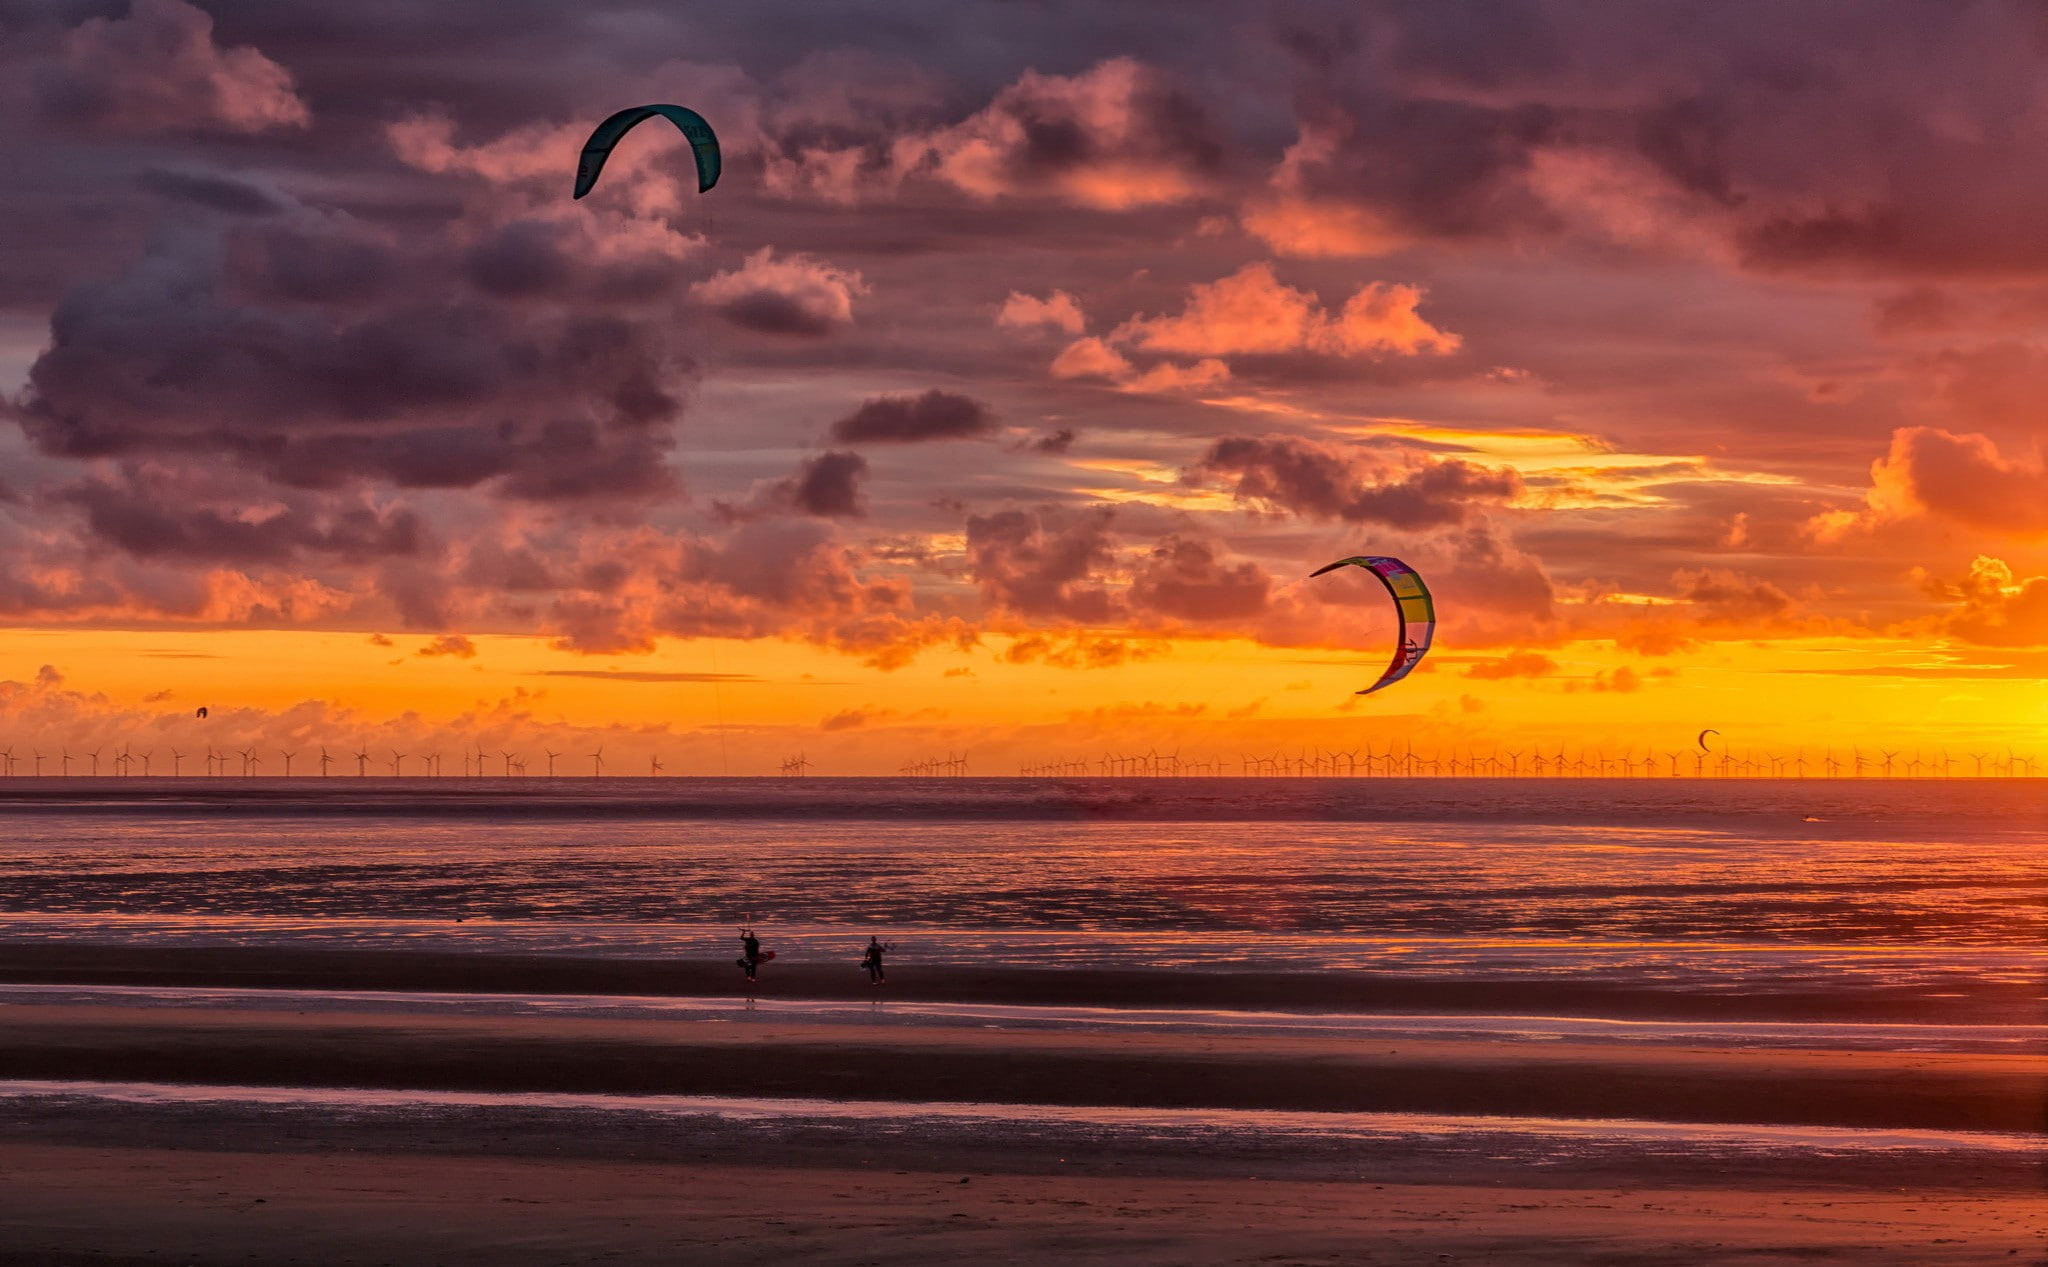 New Brighton, kite surfers, kite surfing, beach, sunset